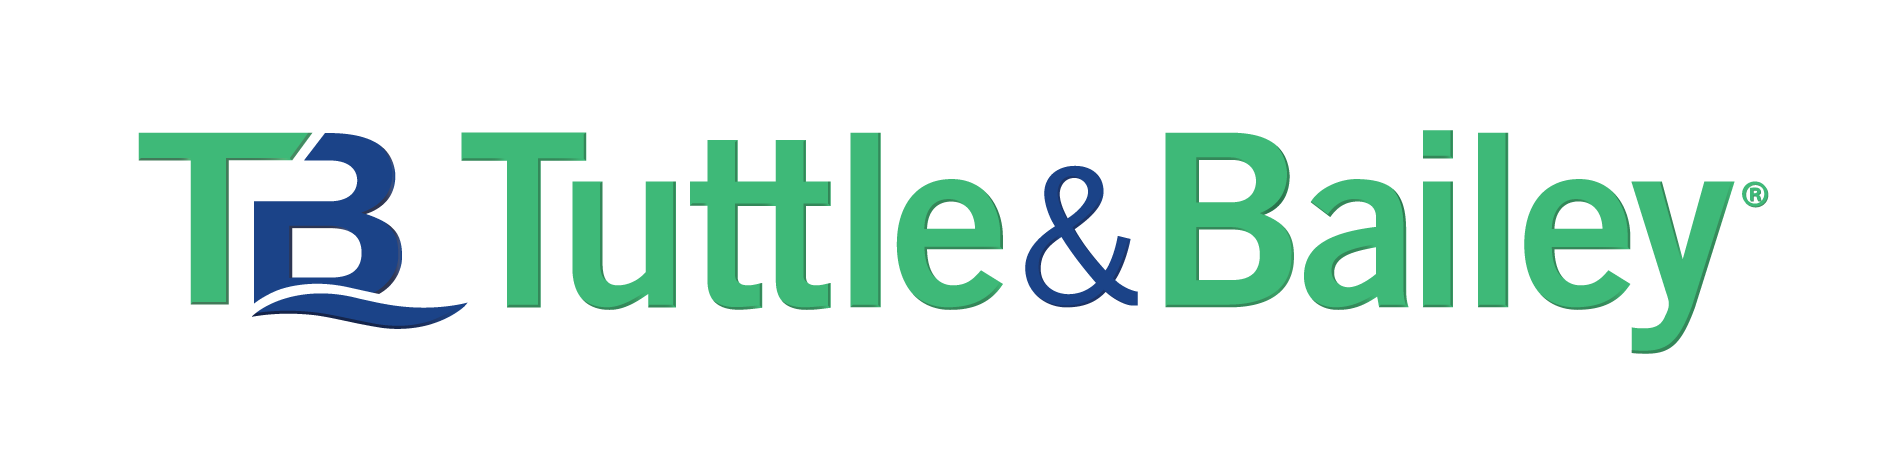 Tuttle & Bailey logo